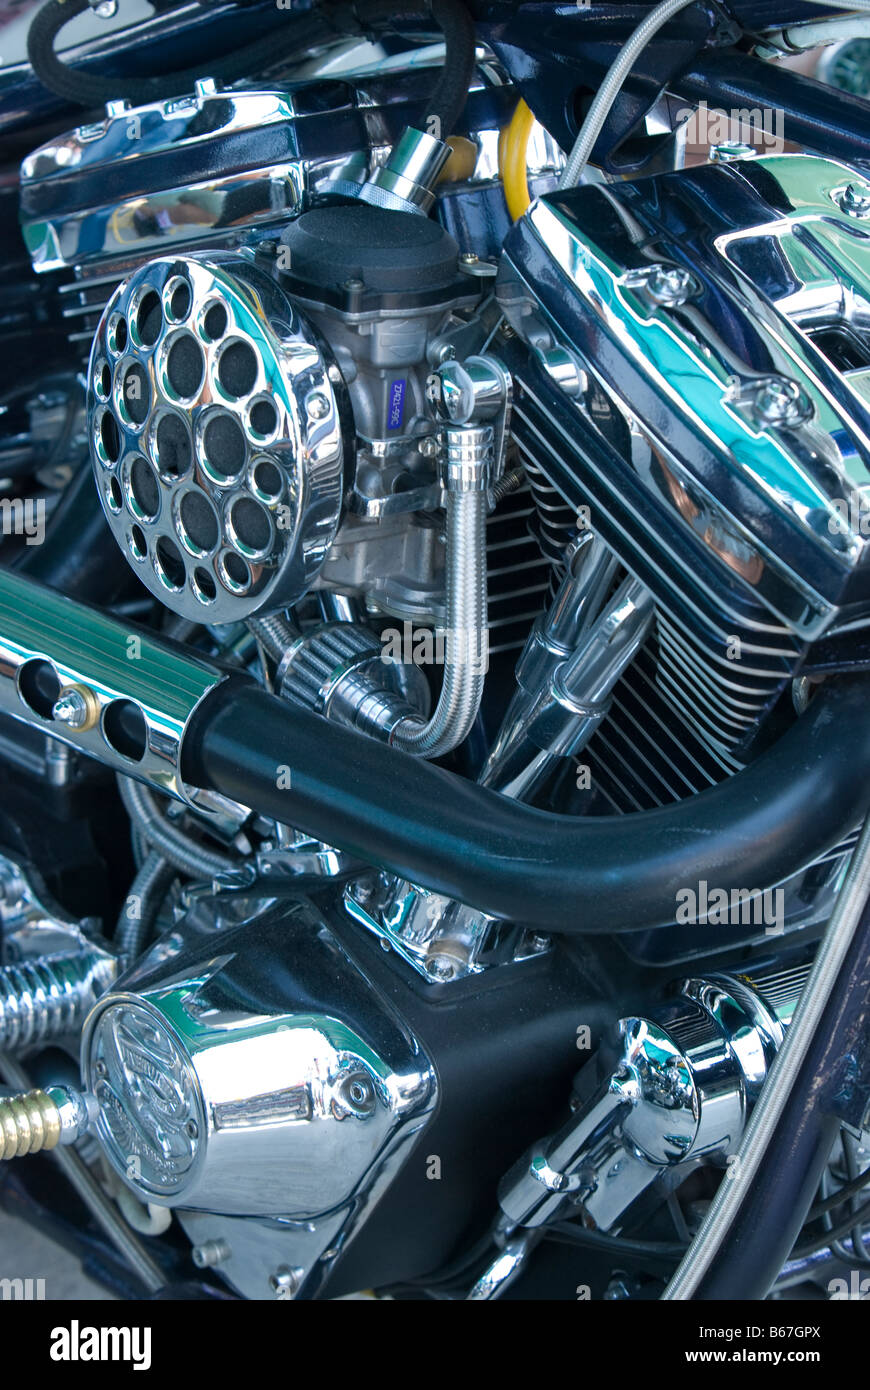 Klassische V2-Motor von Harley Davidson Motorrad Stockfoto